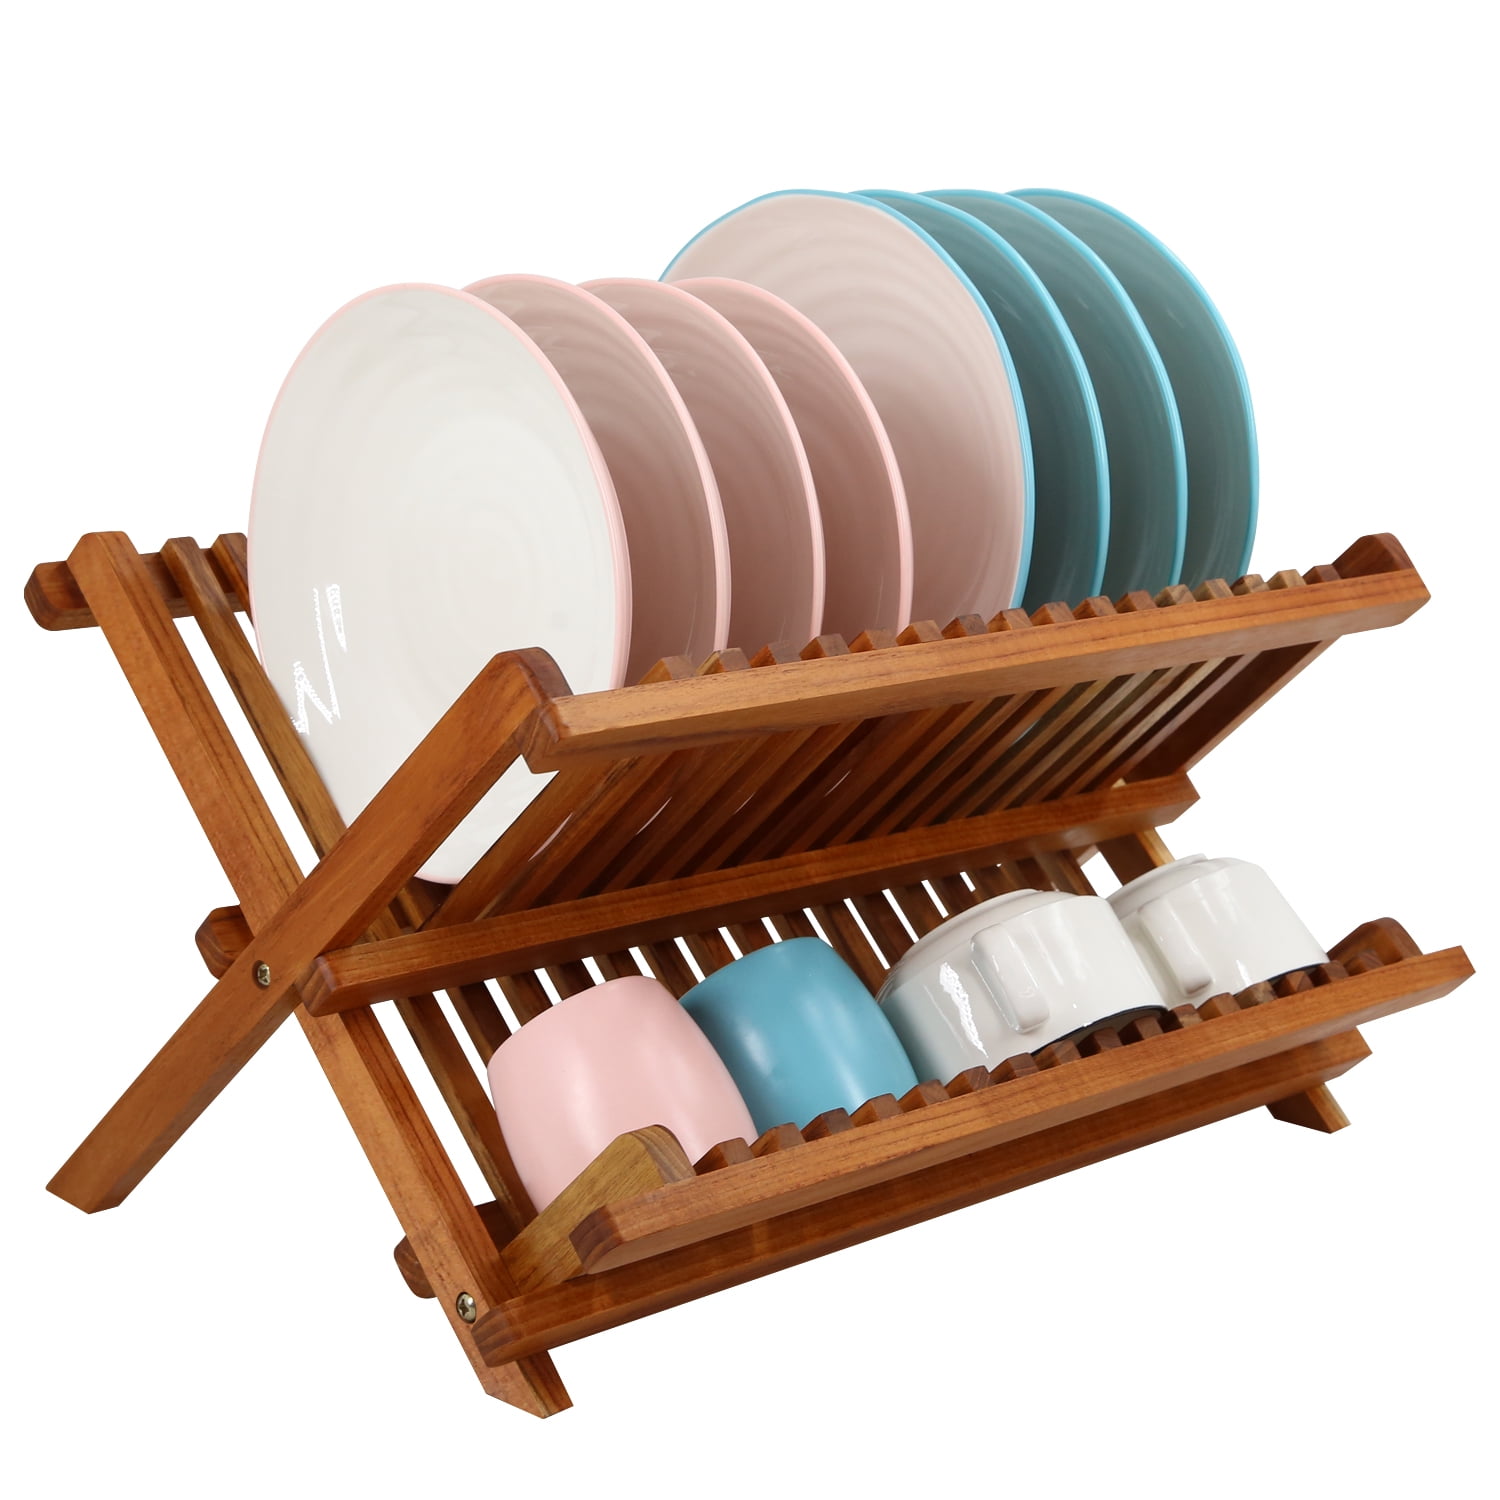 X Shaped Folding Plastic Dish Drying Rack 2 Tiers Plates Bowls